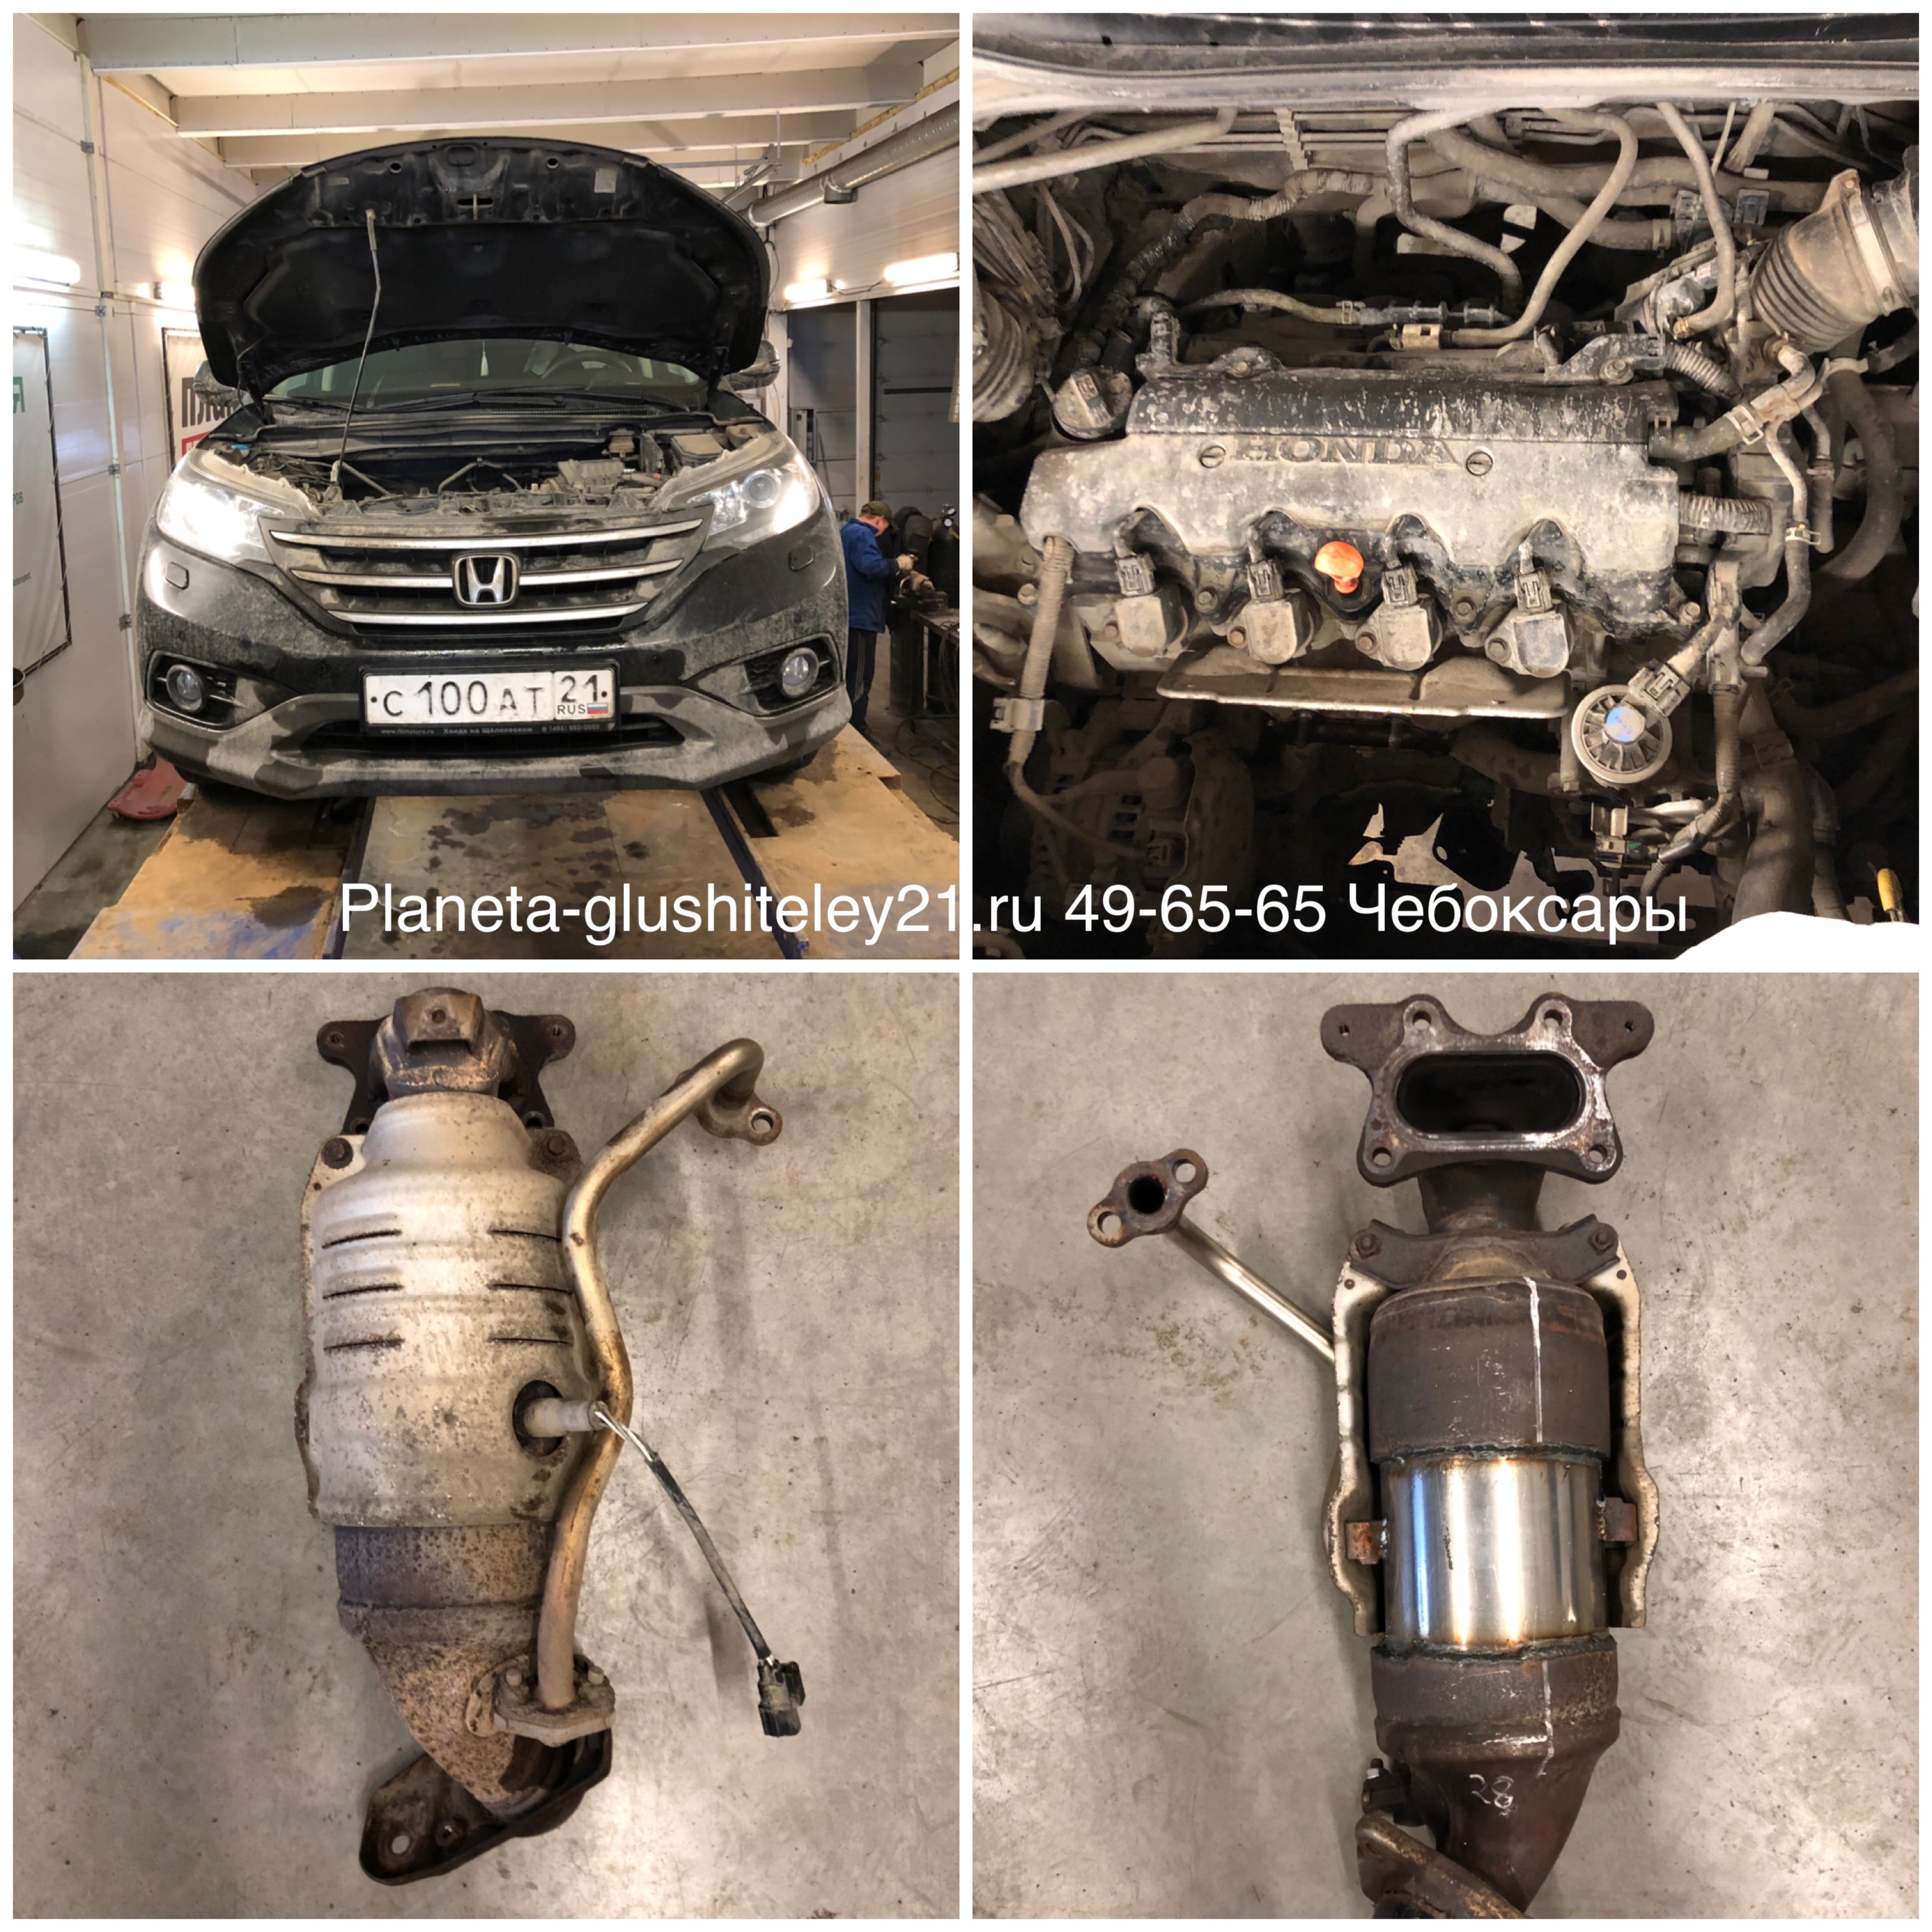 Honda Cr-v удаление катализатора Чебоксары 49-65-65